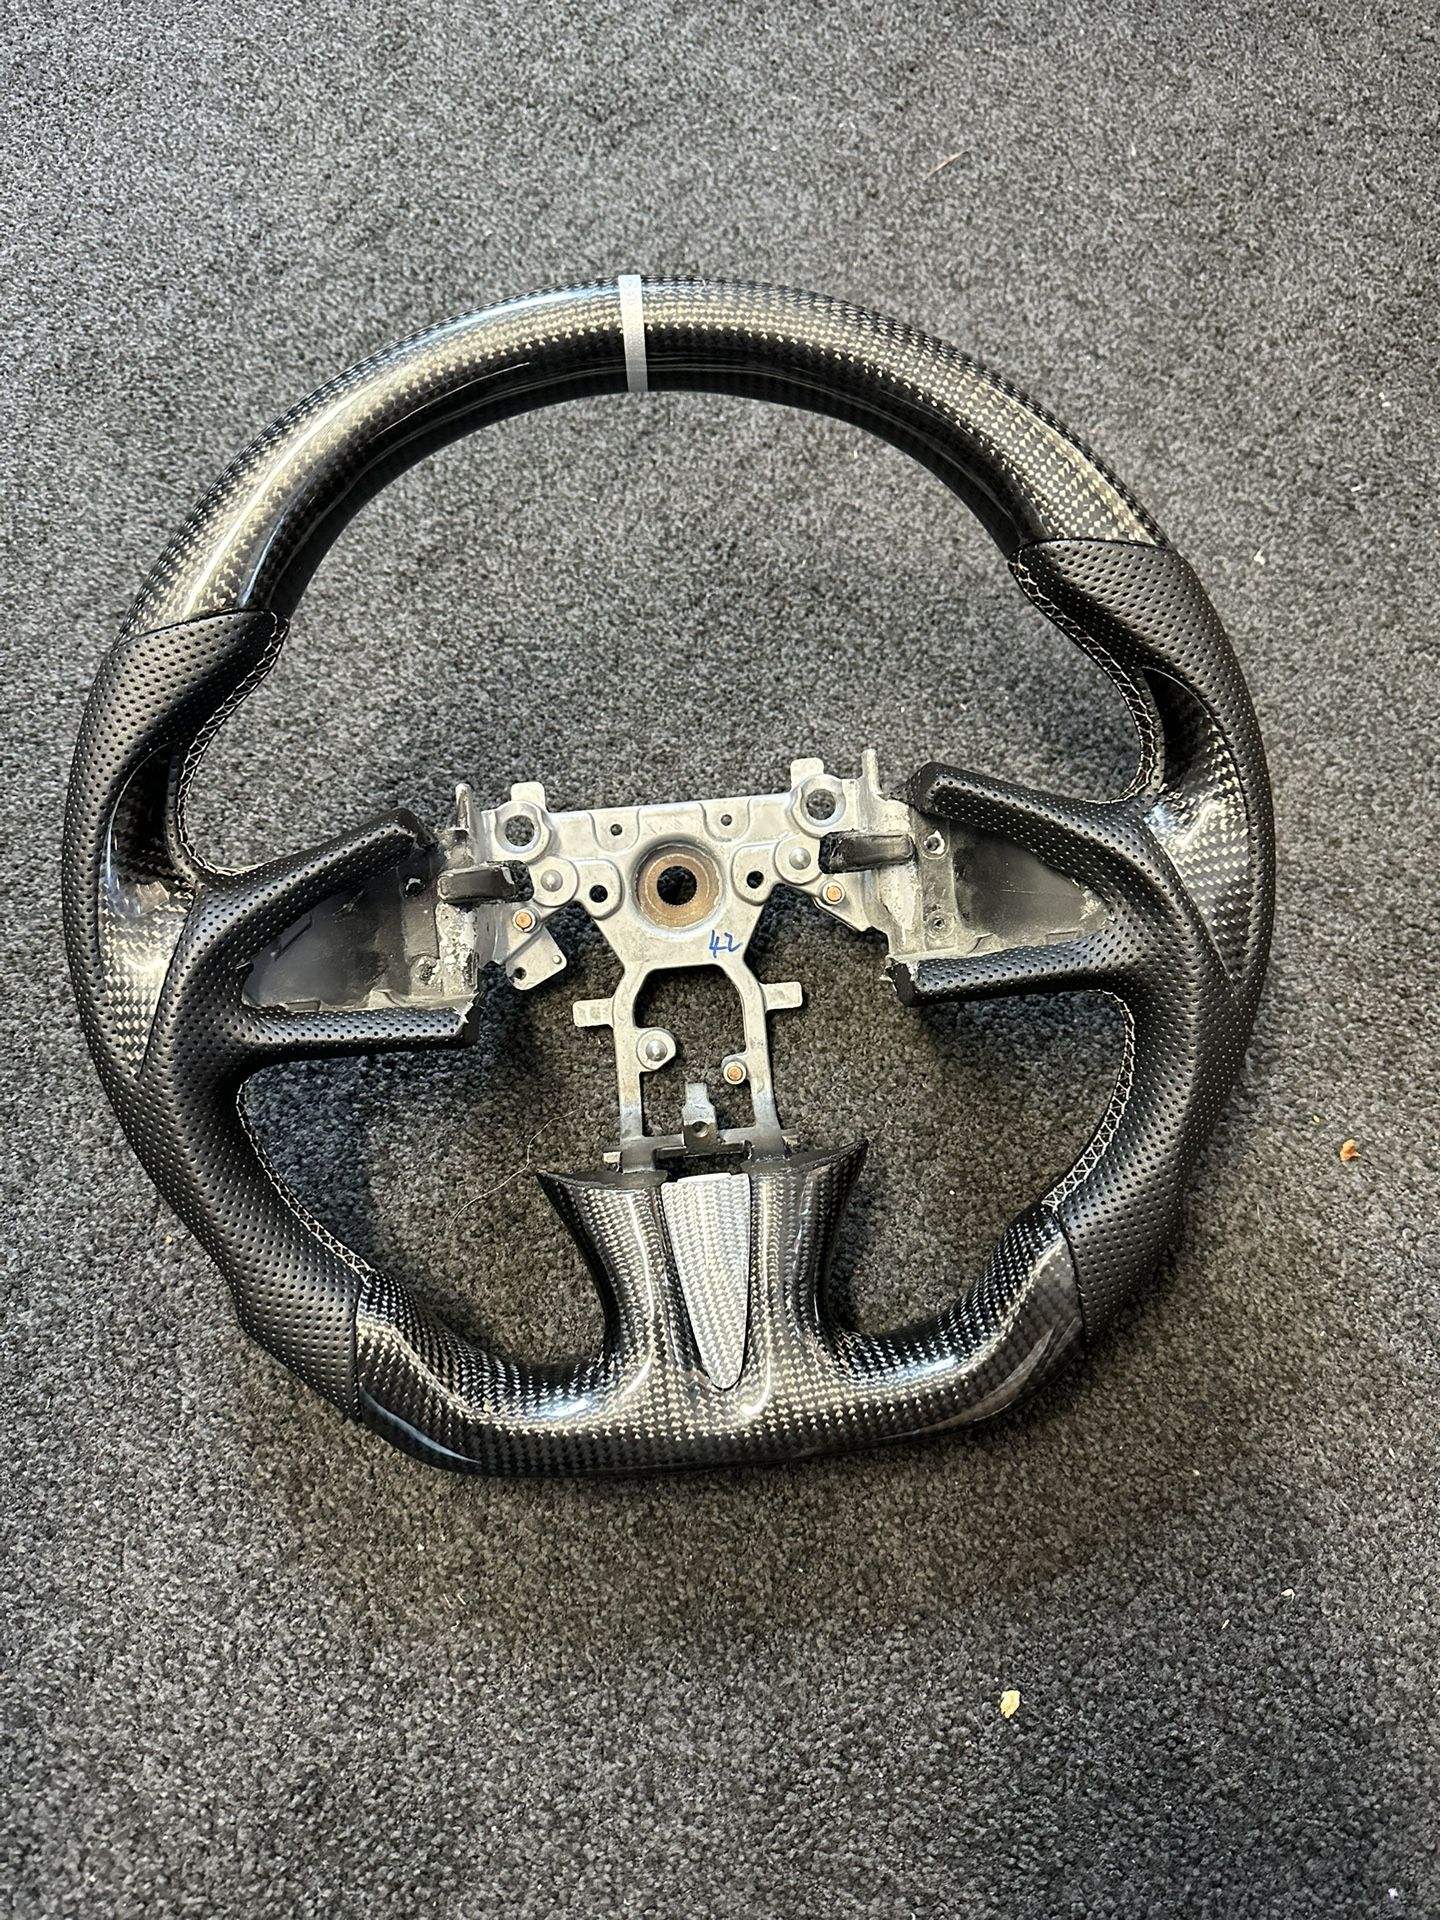 Infiniti Q50 Steering Wheel 14-17